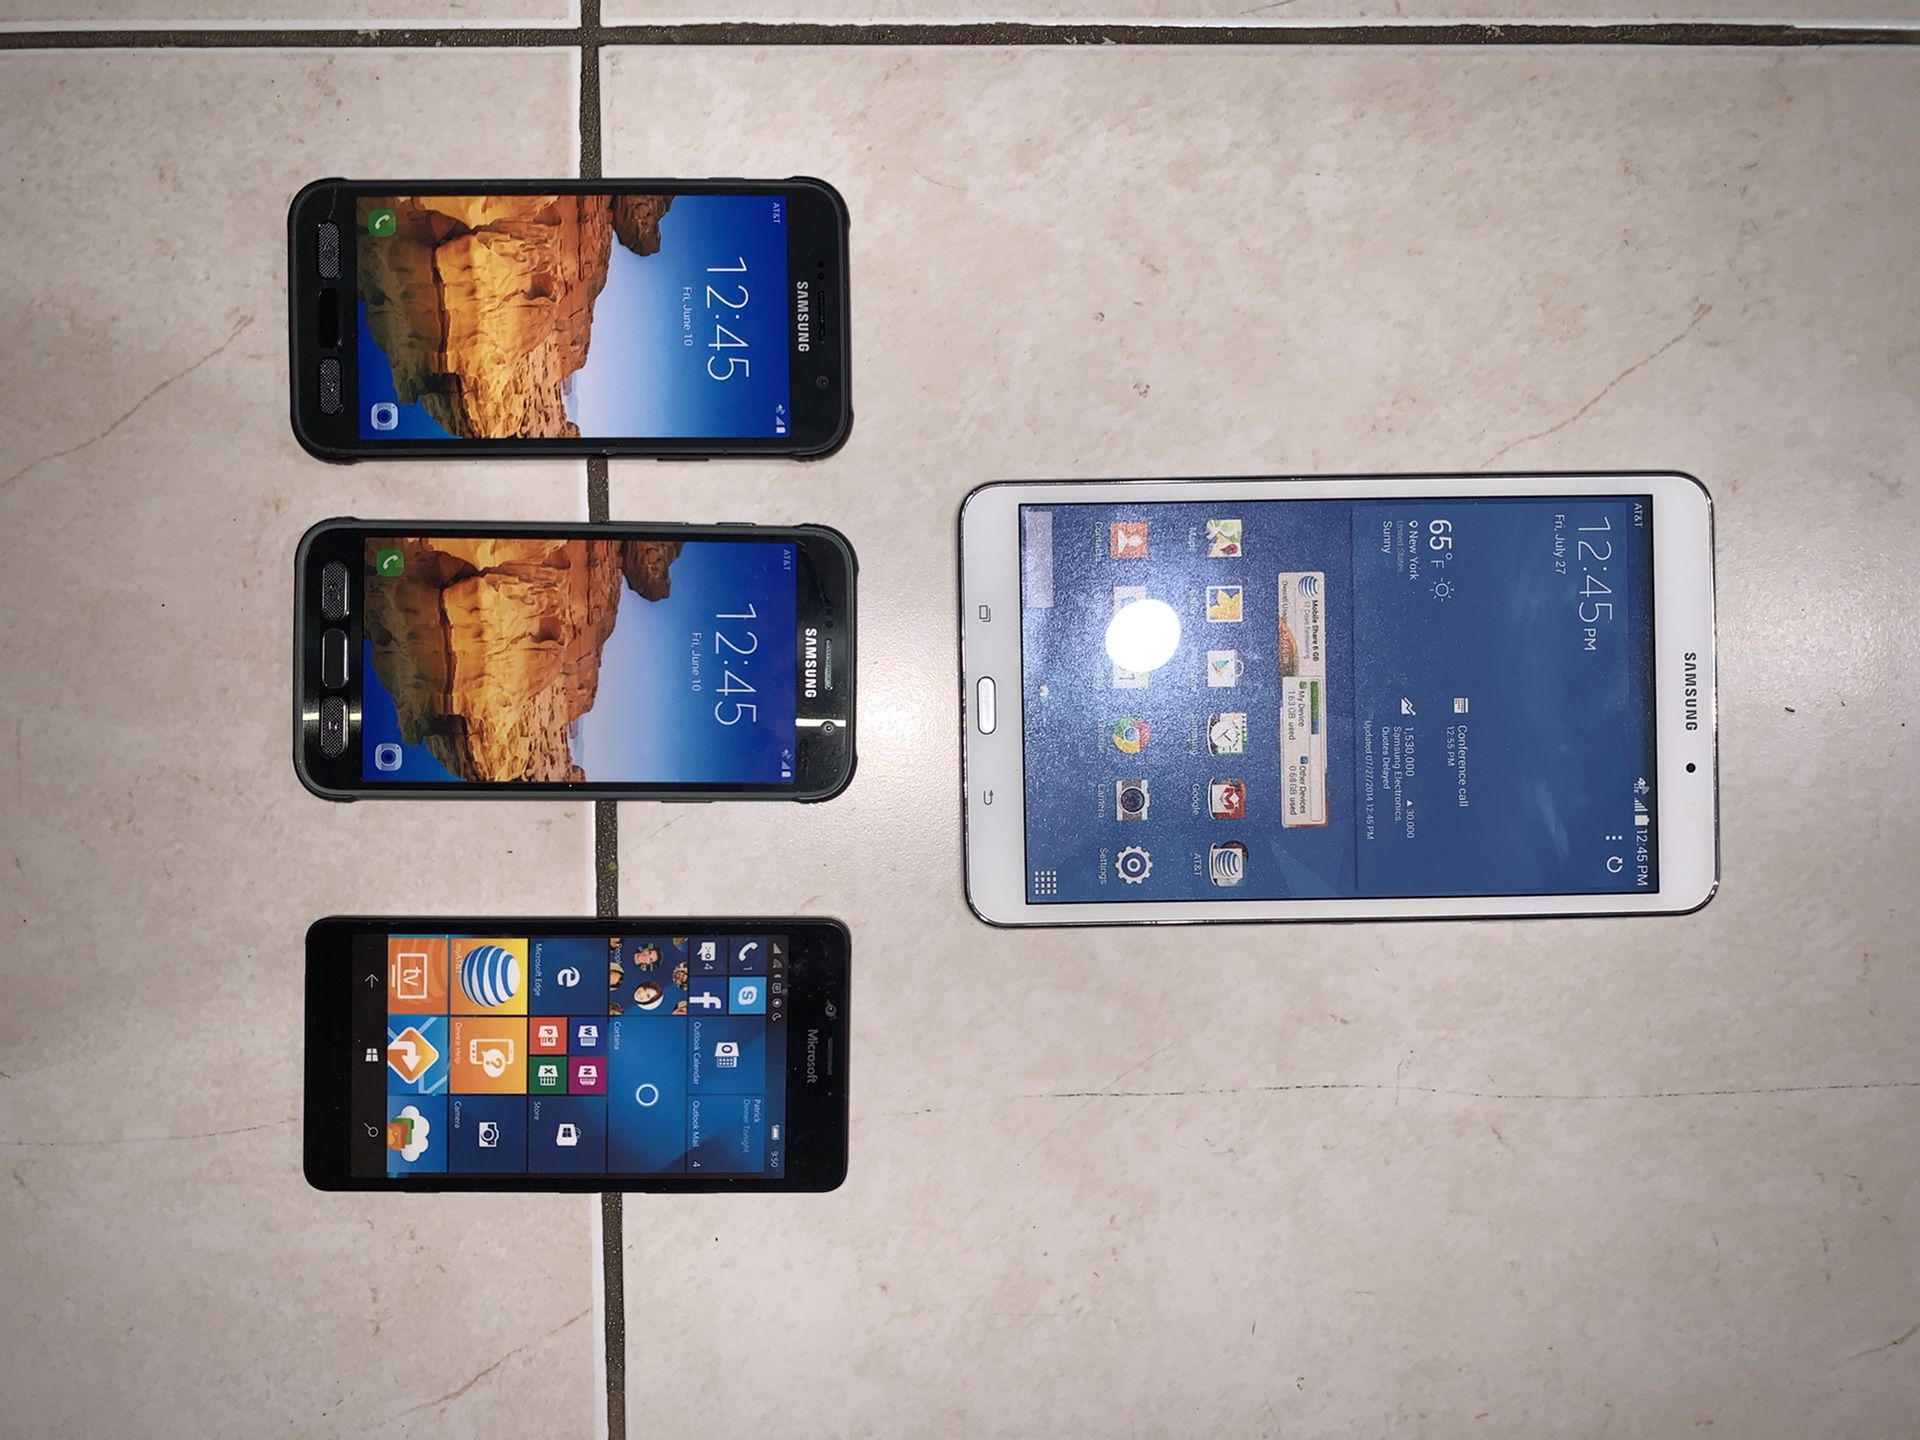 Samsung Phone Models